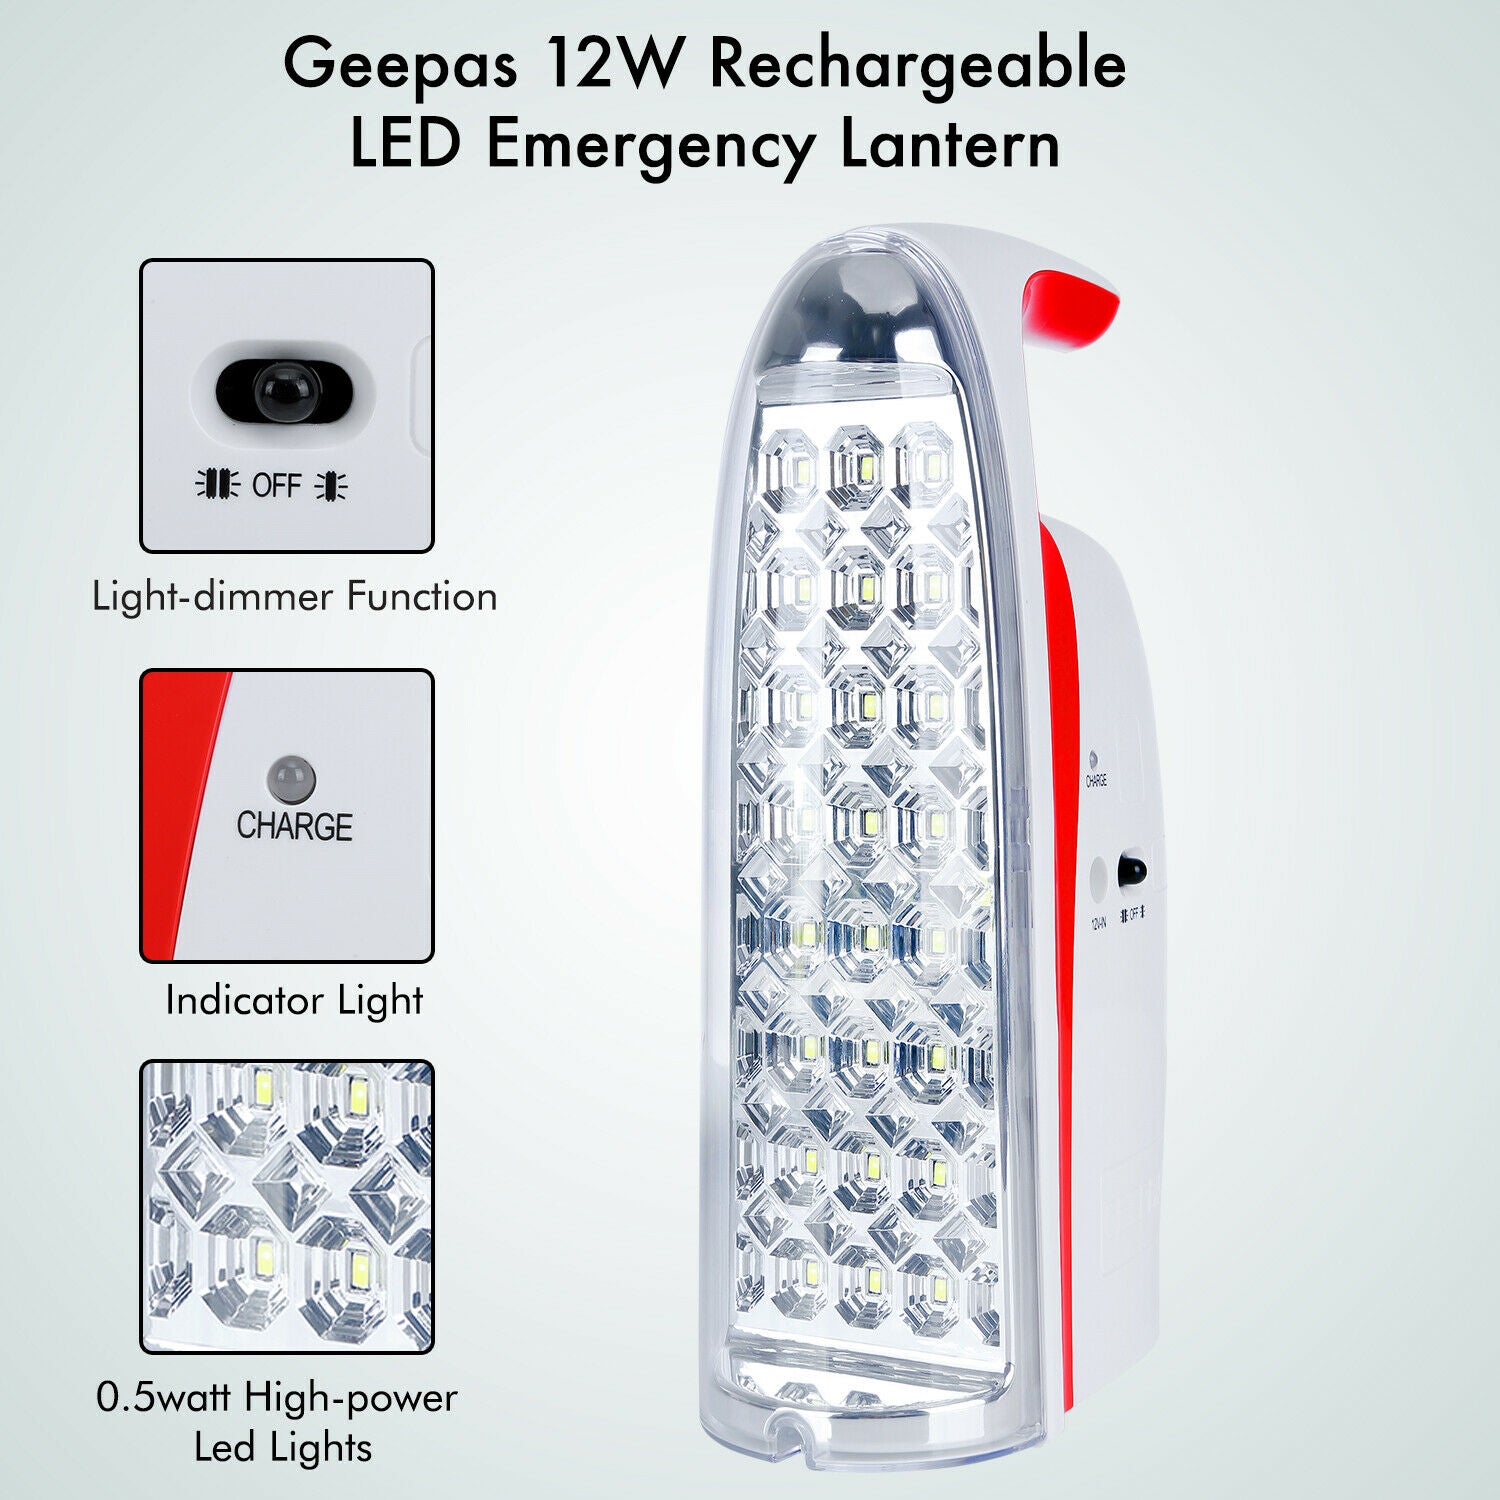 Geepas Rechargeable Emergency Led Lantern